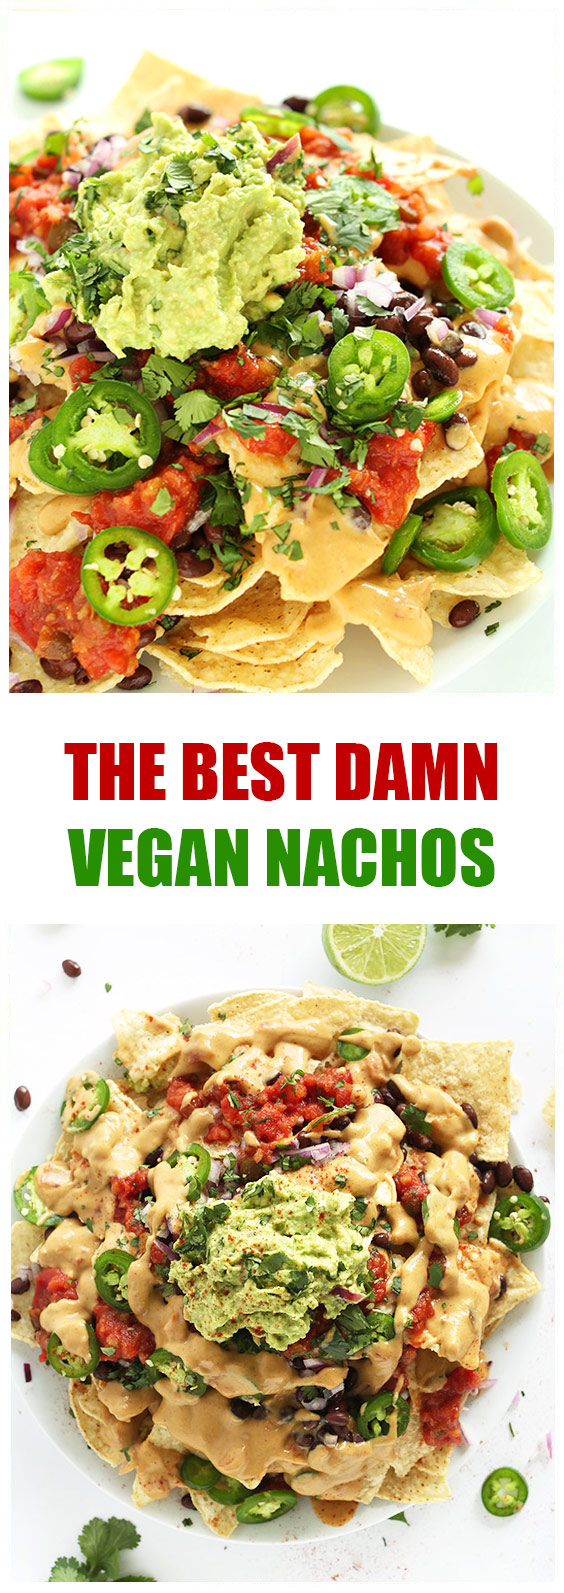 The Best Damn Vegan Nachos - Crown Recipes Idea